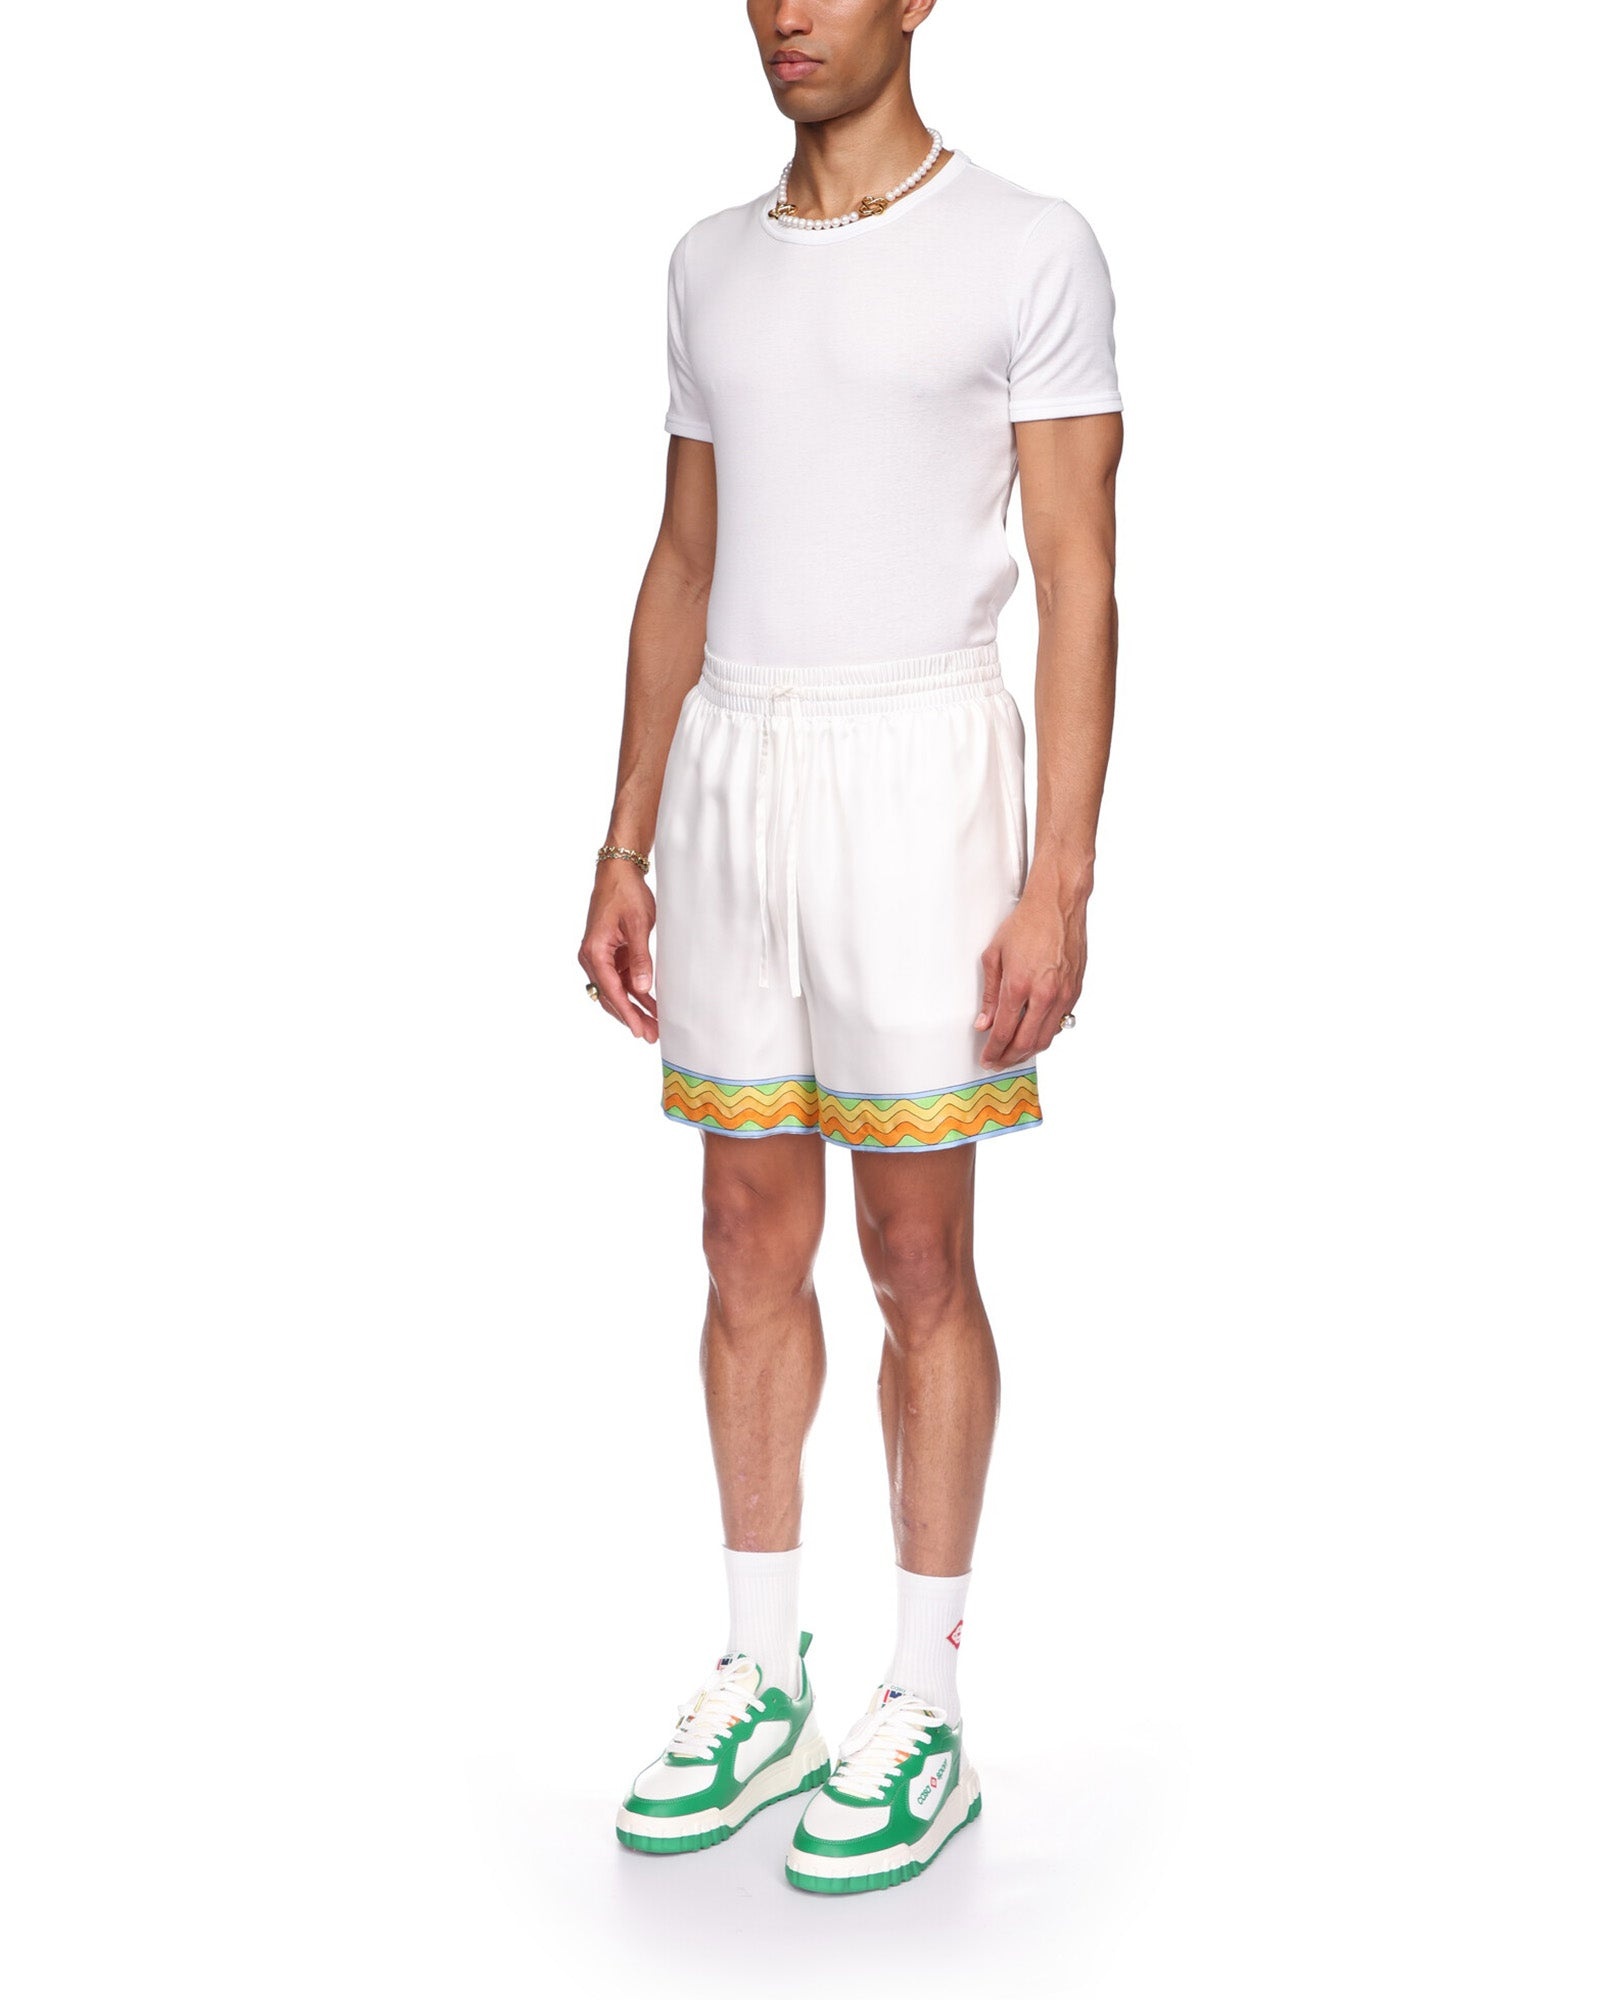 Afro Cubism Tennis Club Silk Shorts - 6